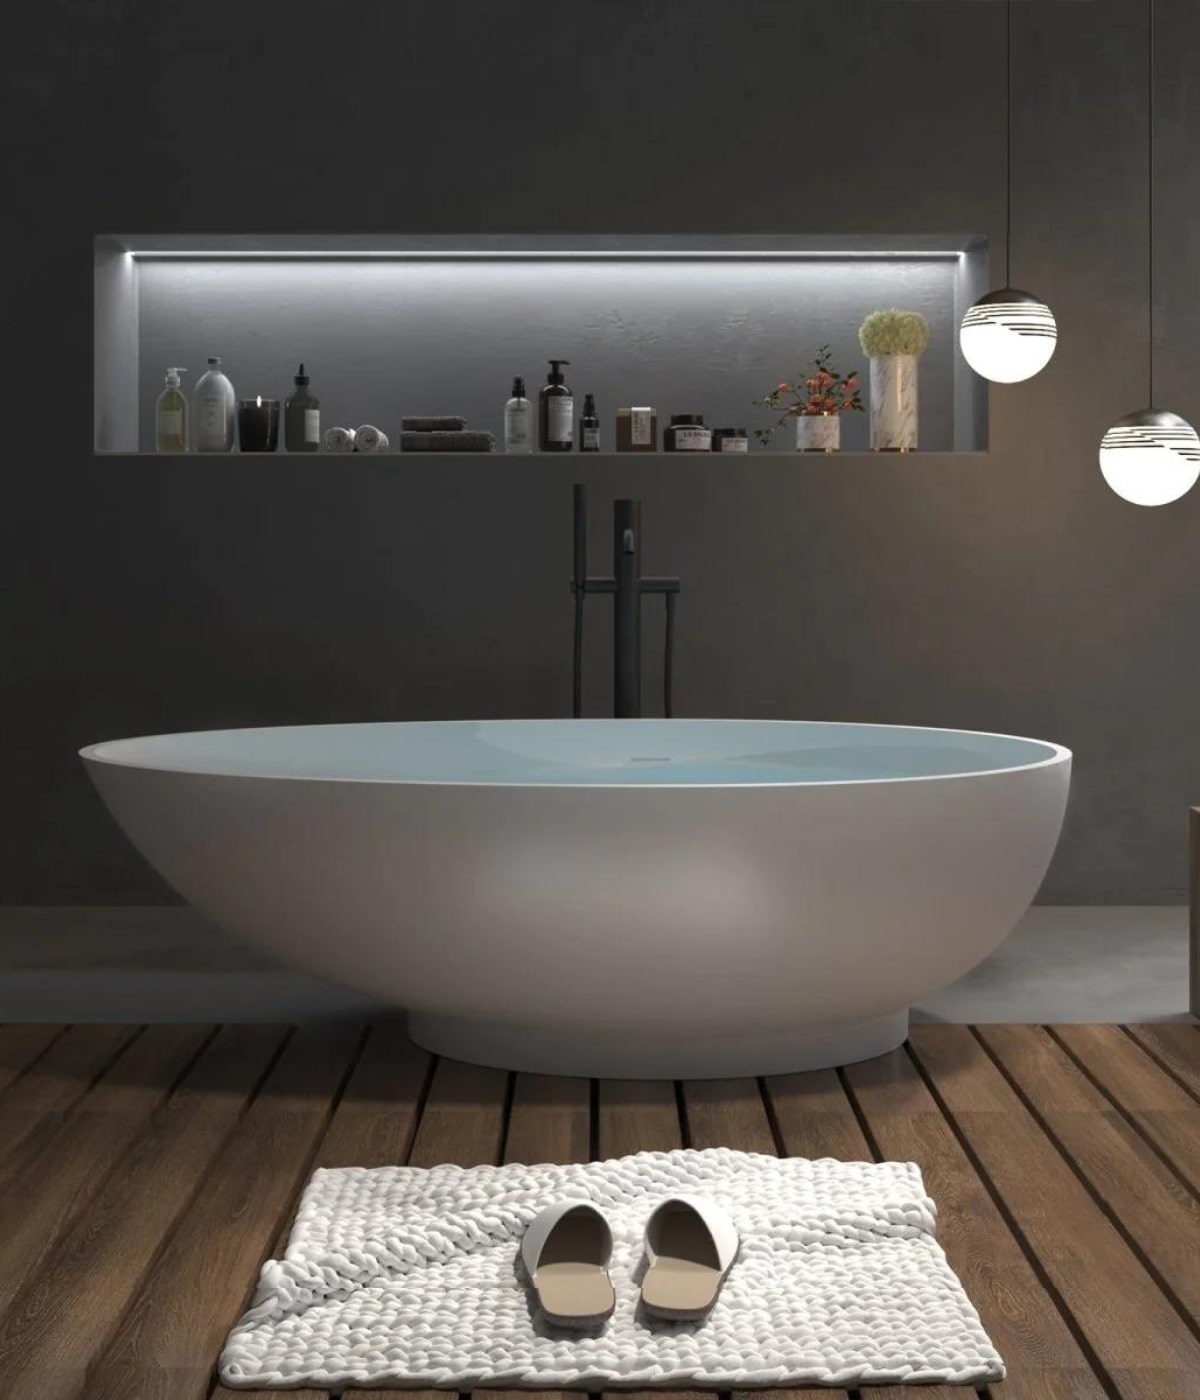 Every Luxurious bathtub needs a luxury bathroom vanity to accompany it.